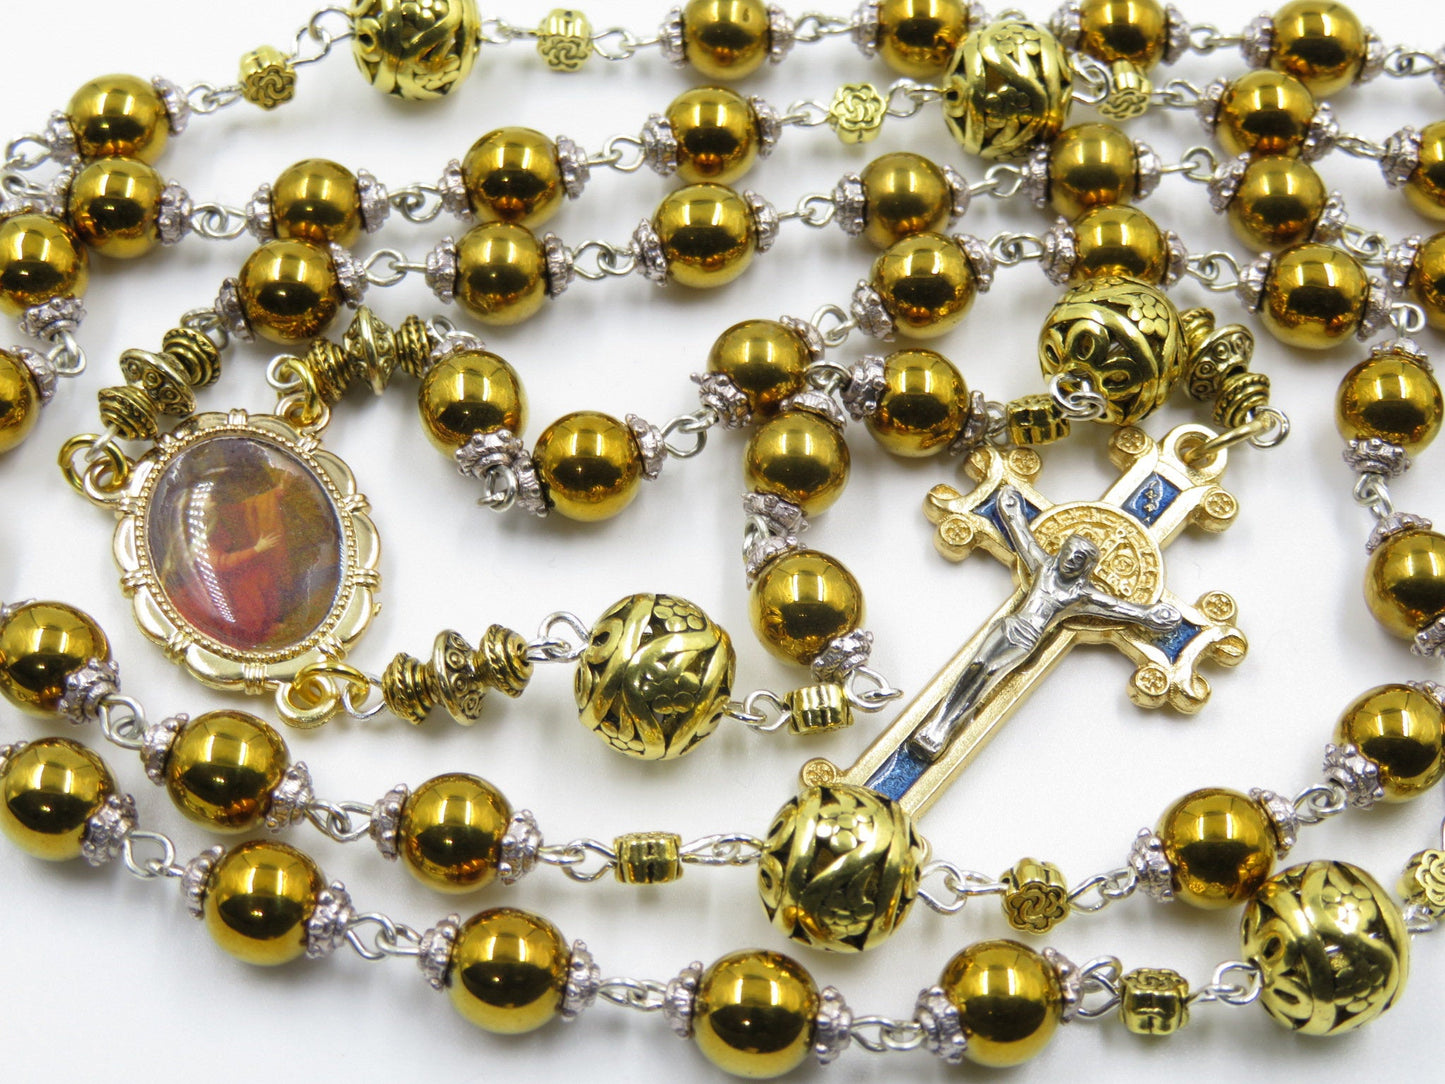 Gold St Mary Magdalene gemstone Rosary beads, St Benedict enamel Crucifix Rosaries, Madonna Rosaries, Gemstone rosary beads, religious gift.